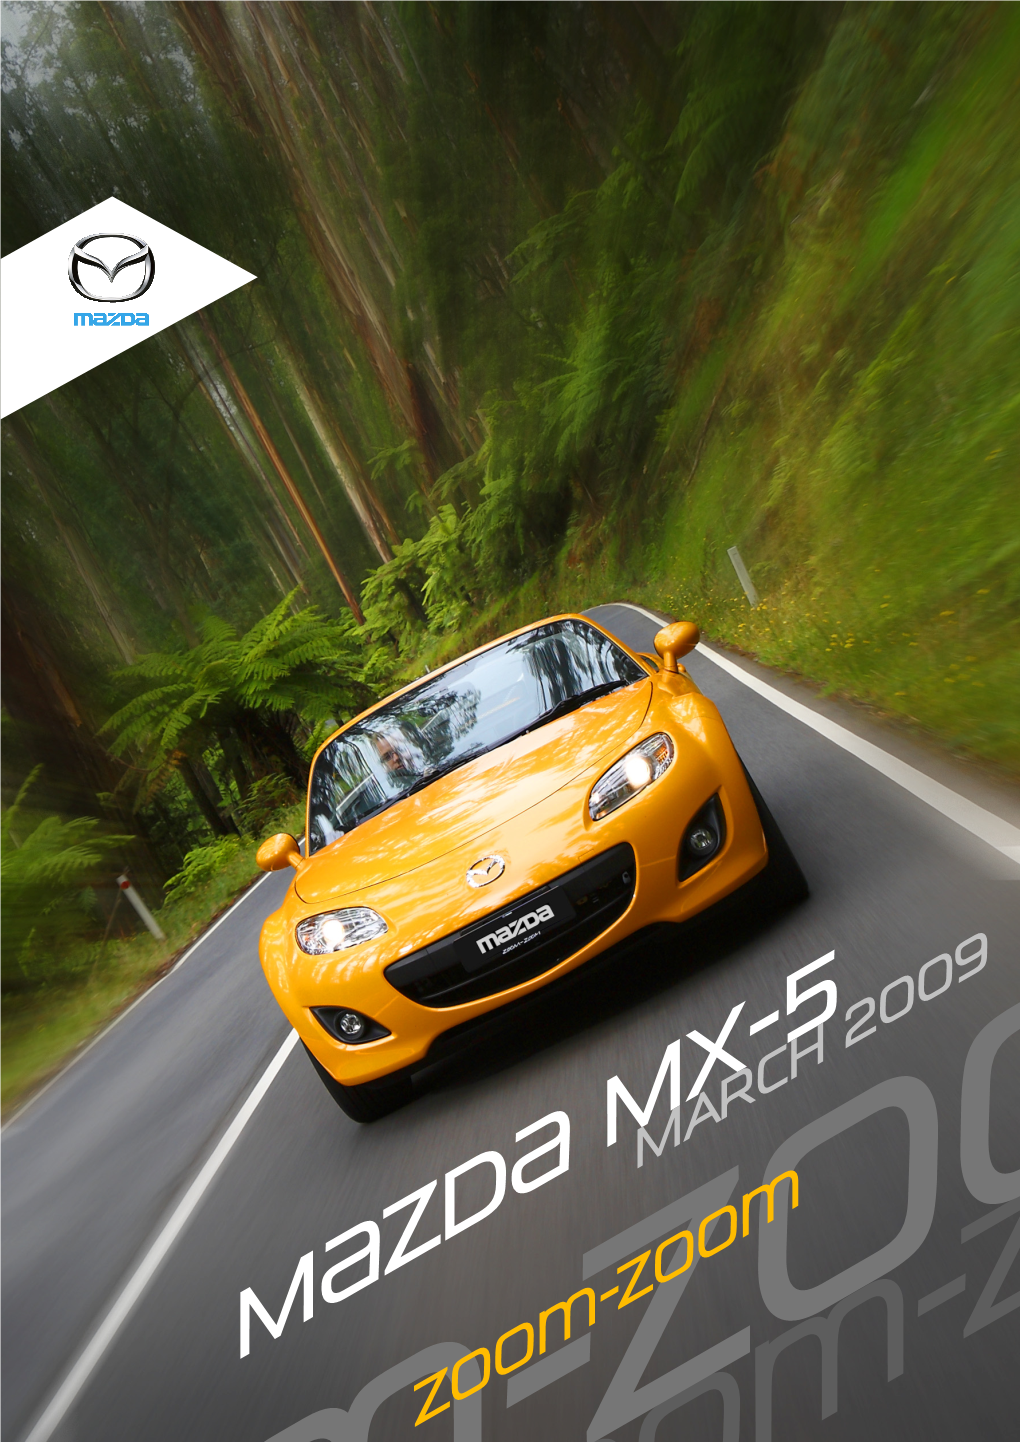 Press Kit: Mazda NC.II MX-5